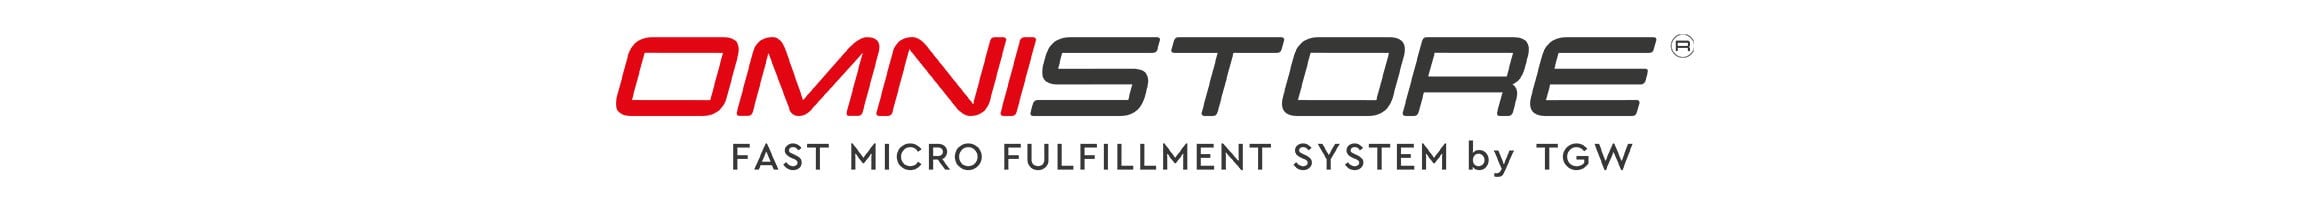 OmniStore® - Fast Micro Fulfillment System by TGW